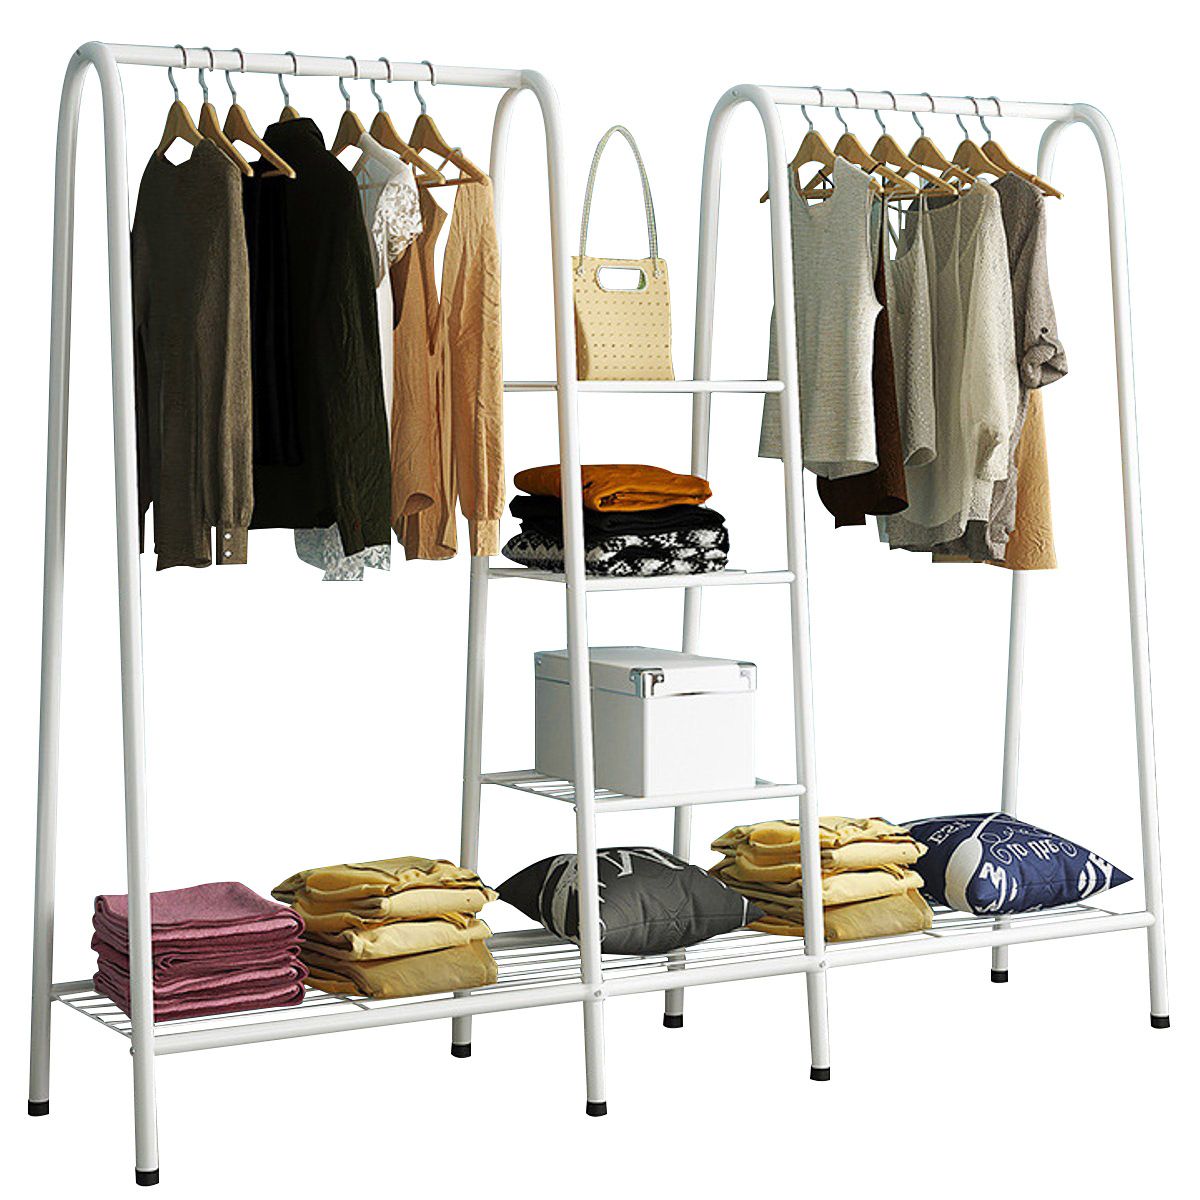 Clothes Hanger Coat Rack Floor Standing Hanger Storage Wardrobe Clothing Drying Racks porte manteau kledingrek perchero de pie